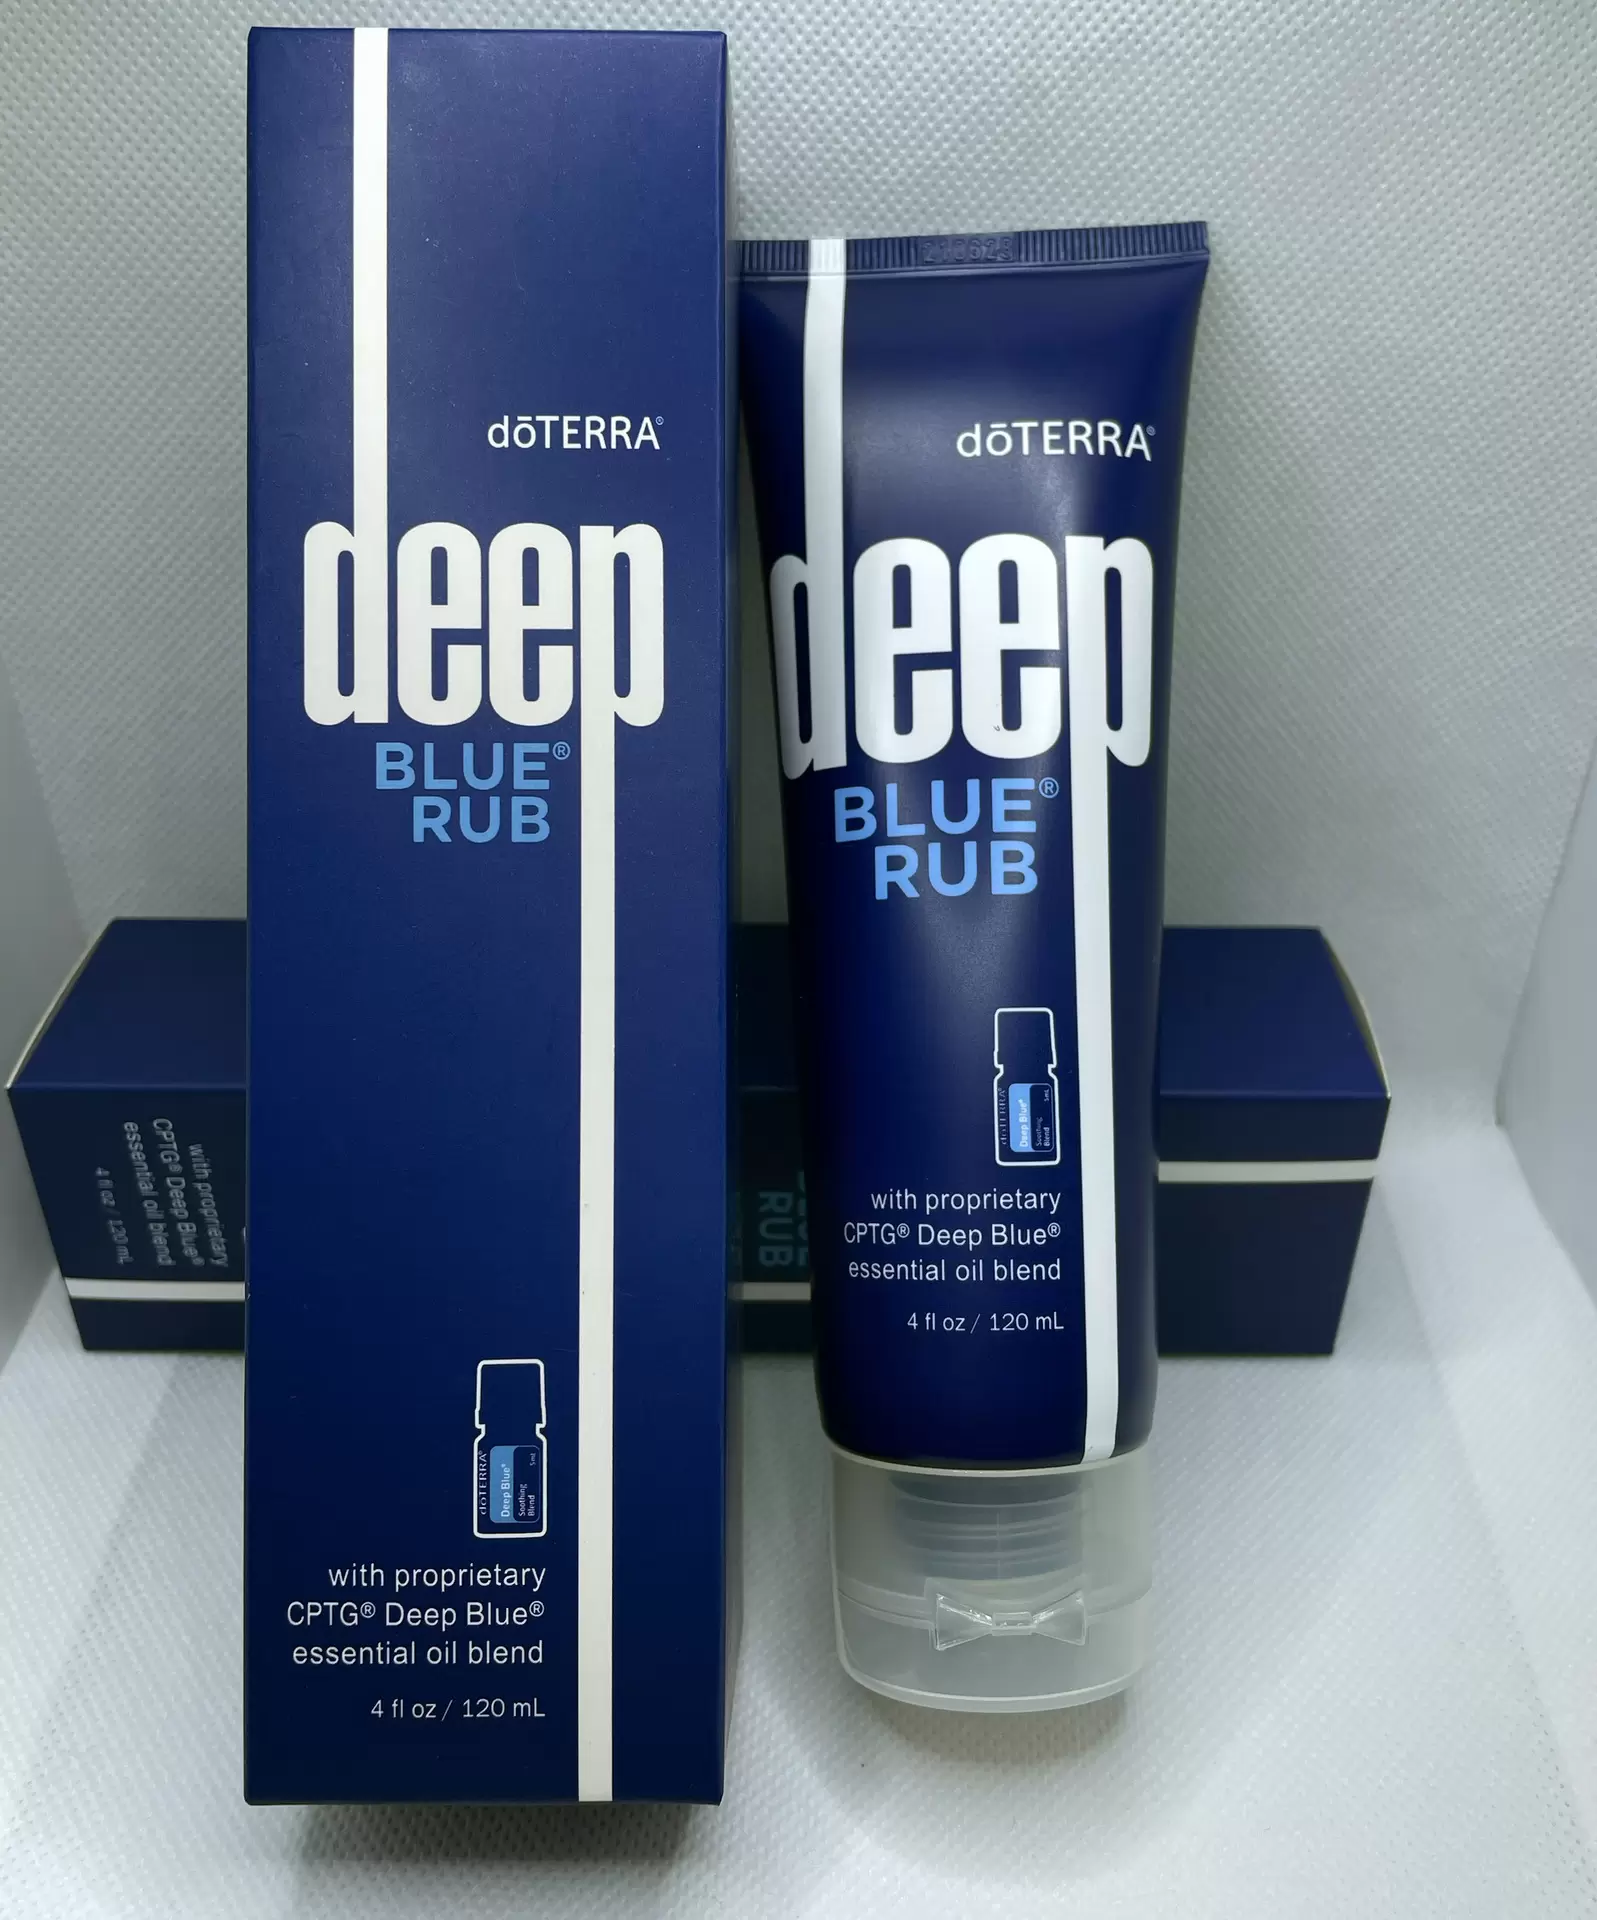 

High Quality Foundation Primer Body Skin Care Deep BLUE RUB Topical Cream Essential Oil 120ml lotions, White